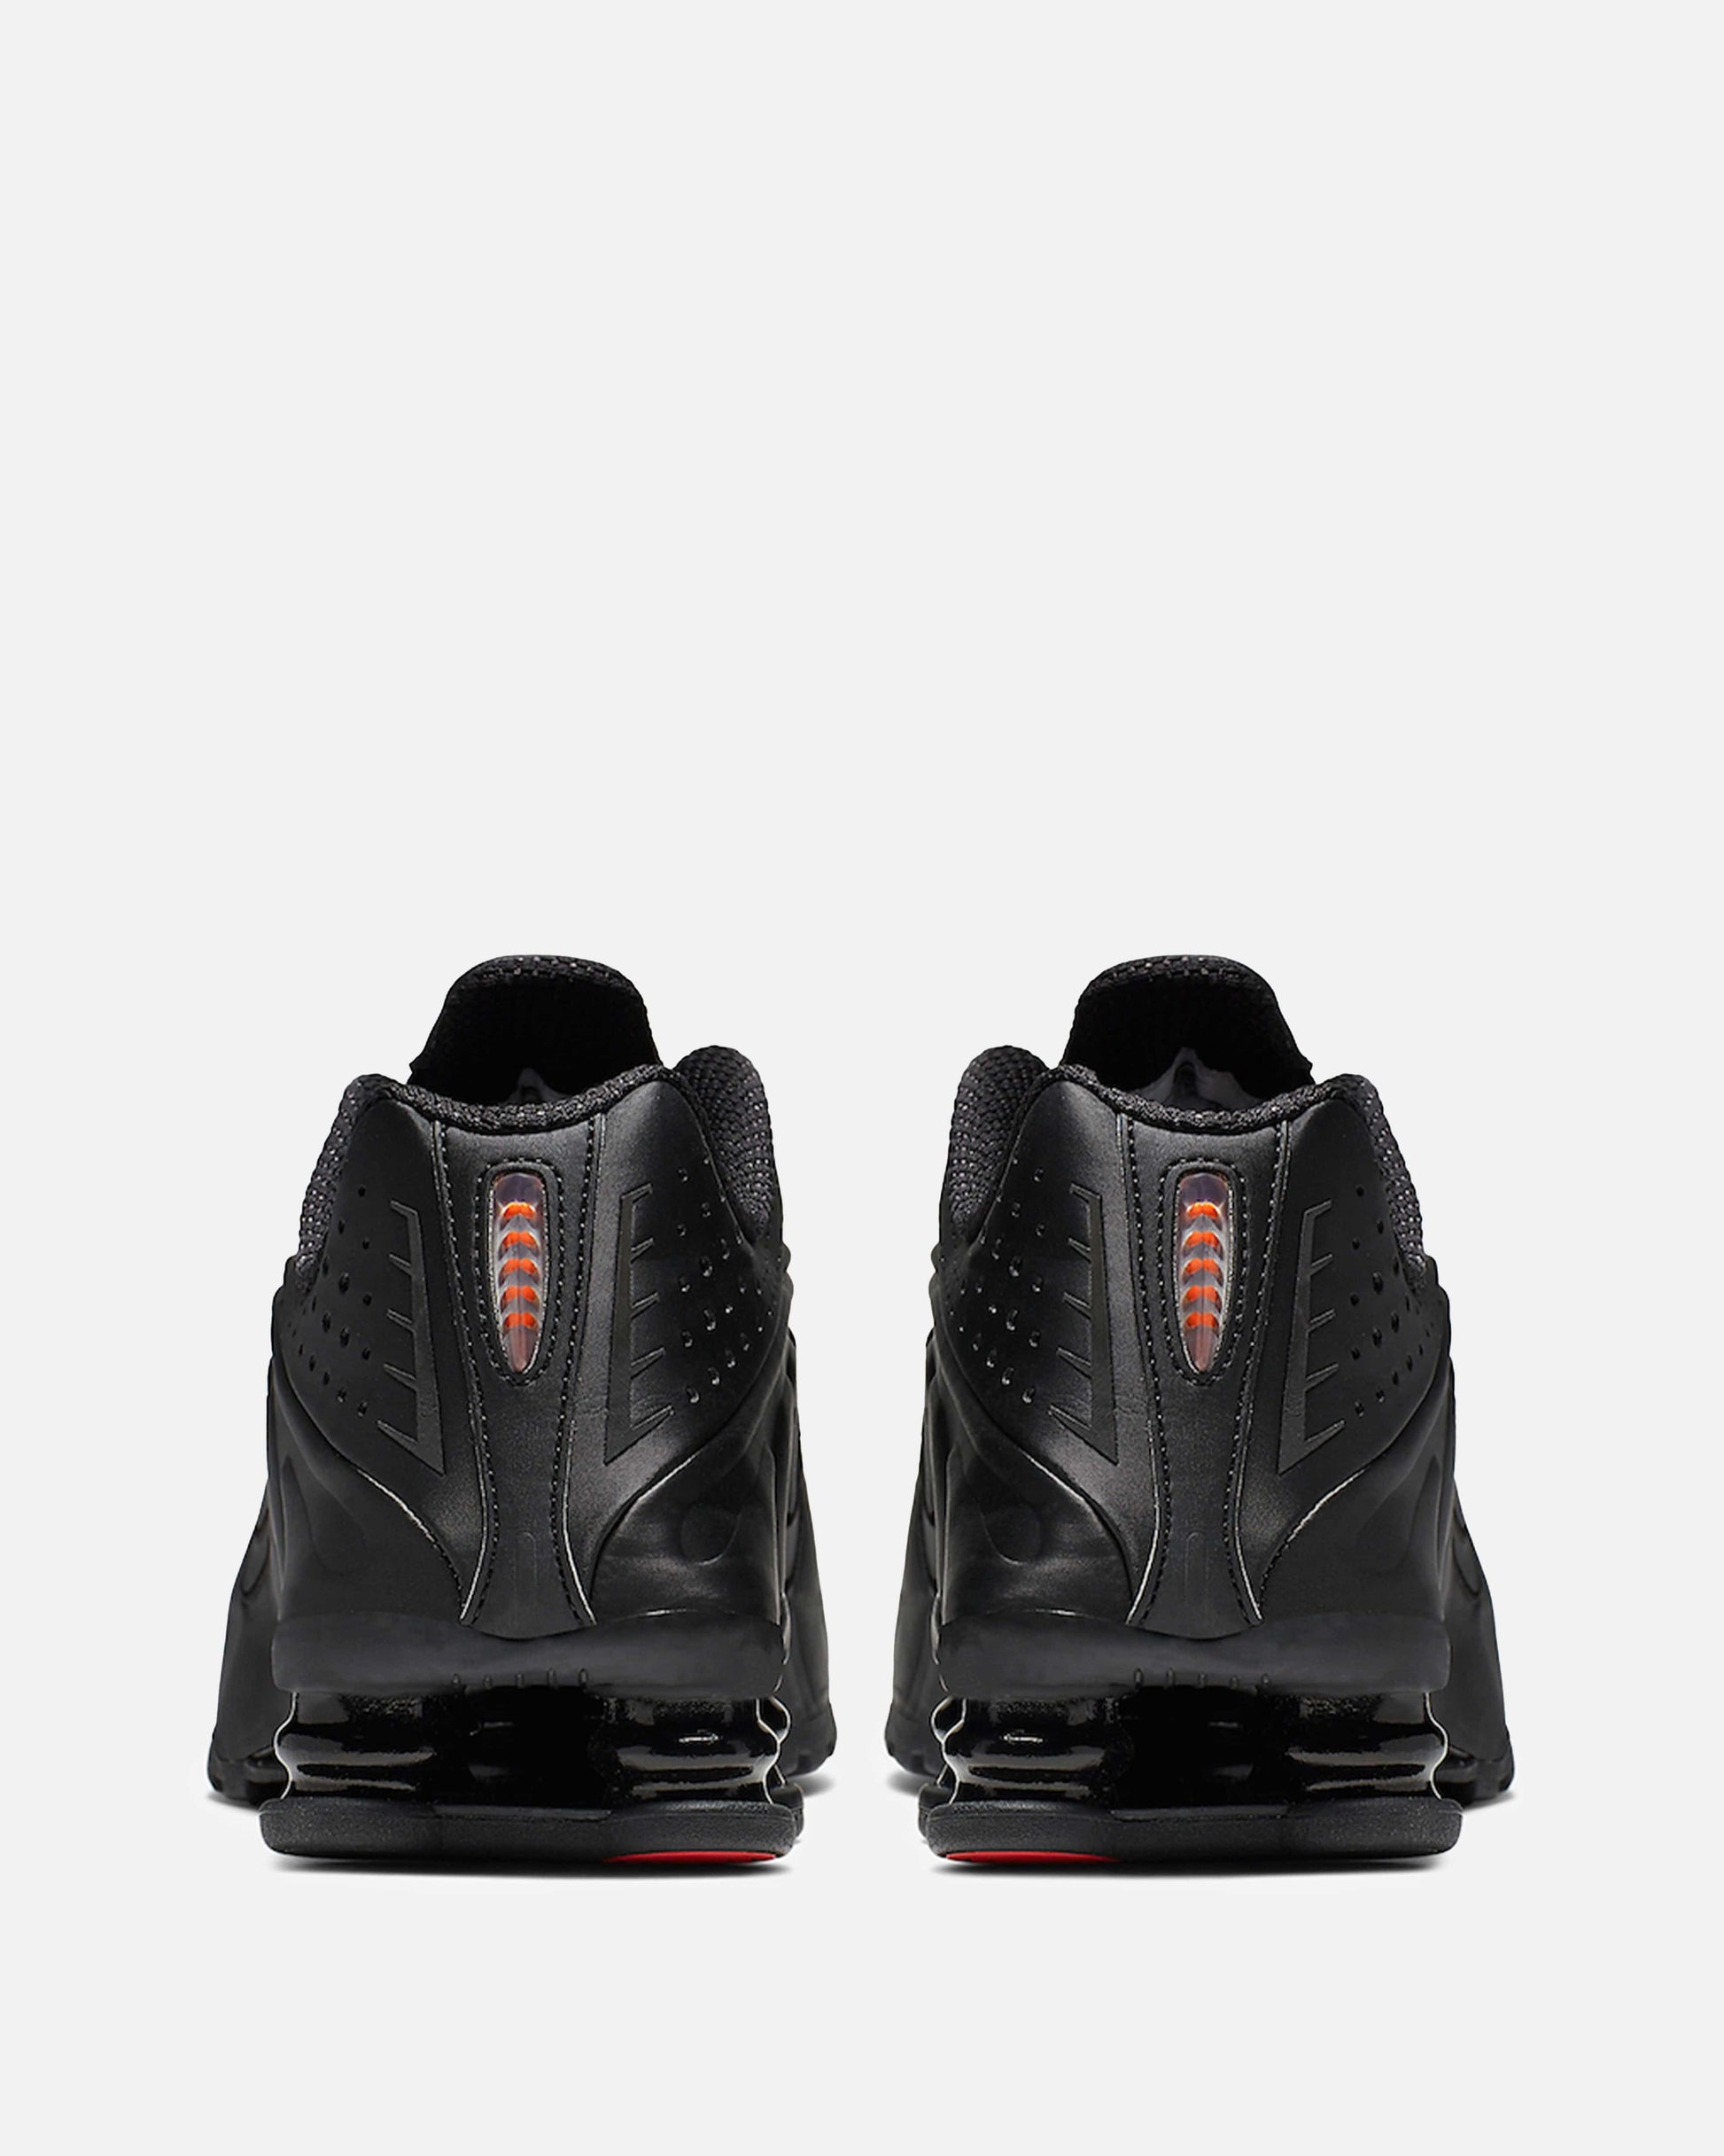 Nike Men's Sneakers Shox R4 'Black'